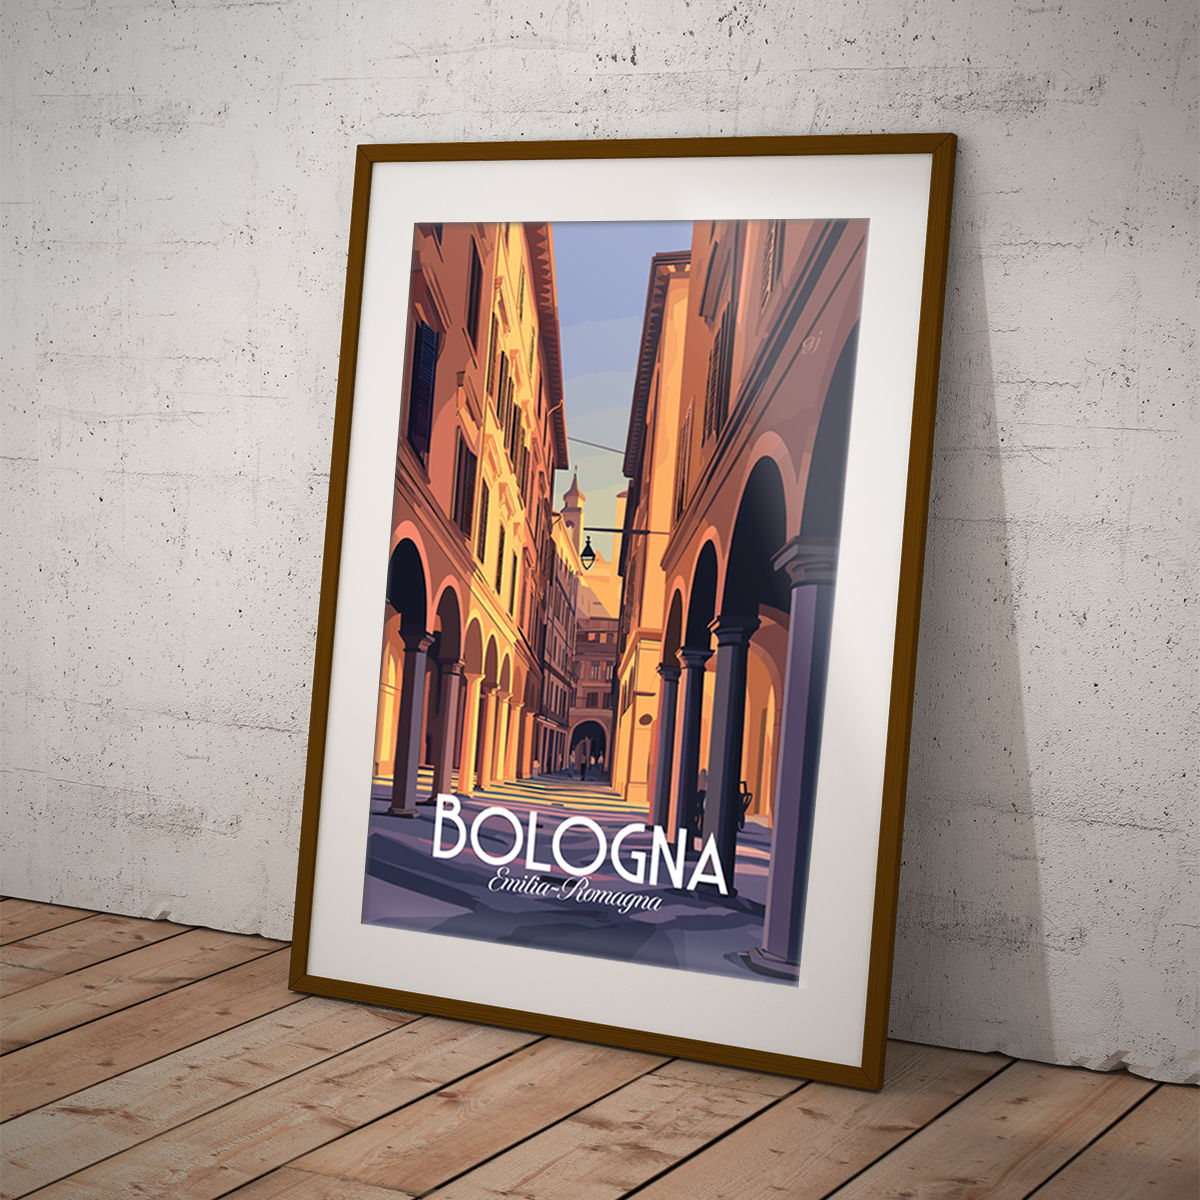 Bologna | Travel Poster